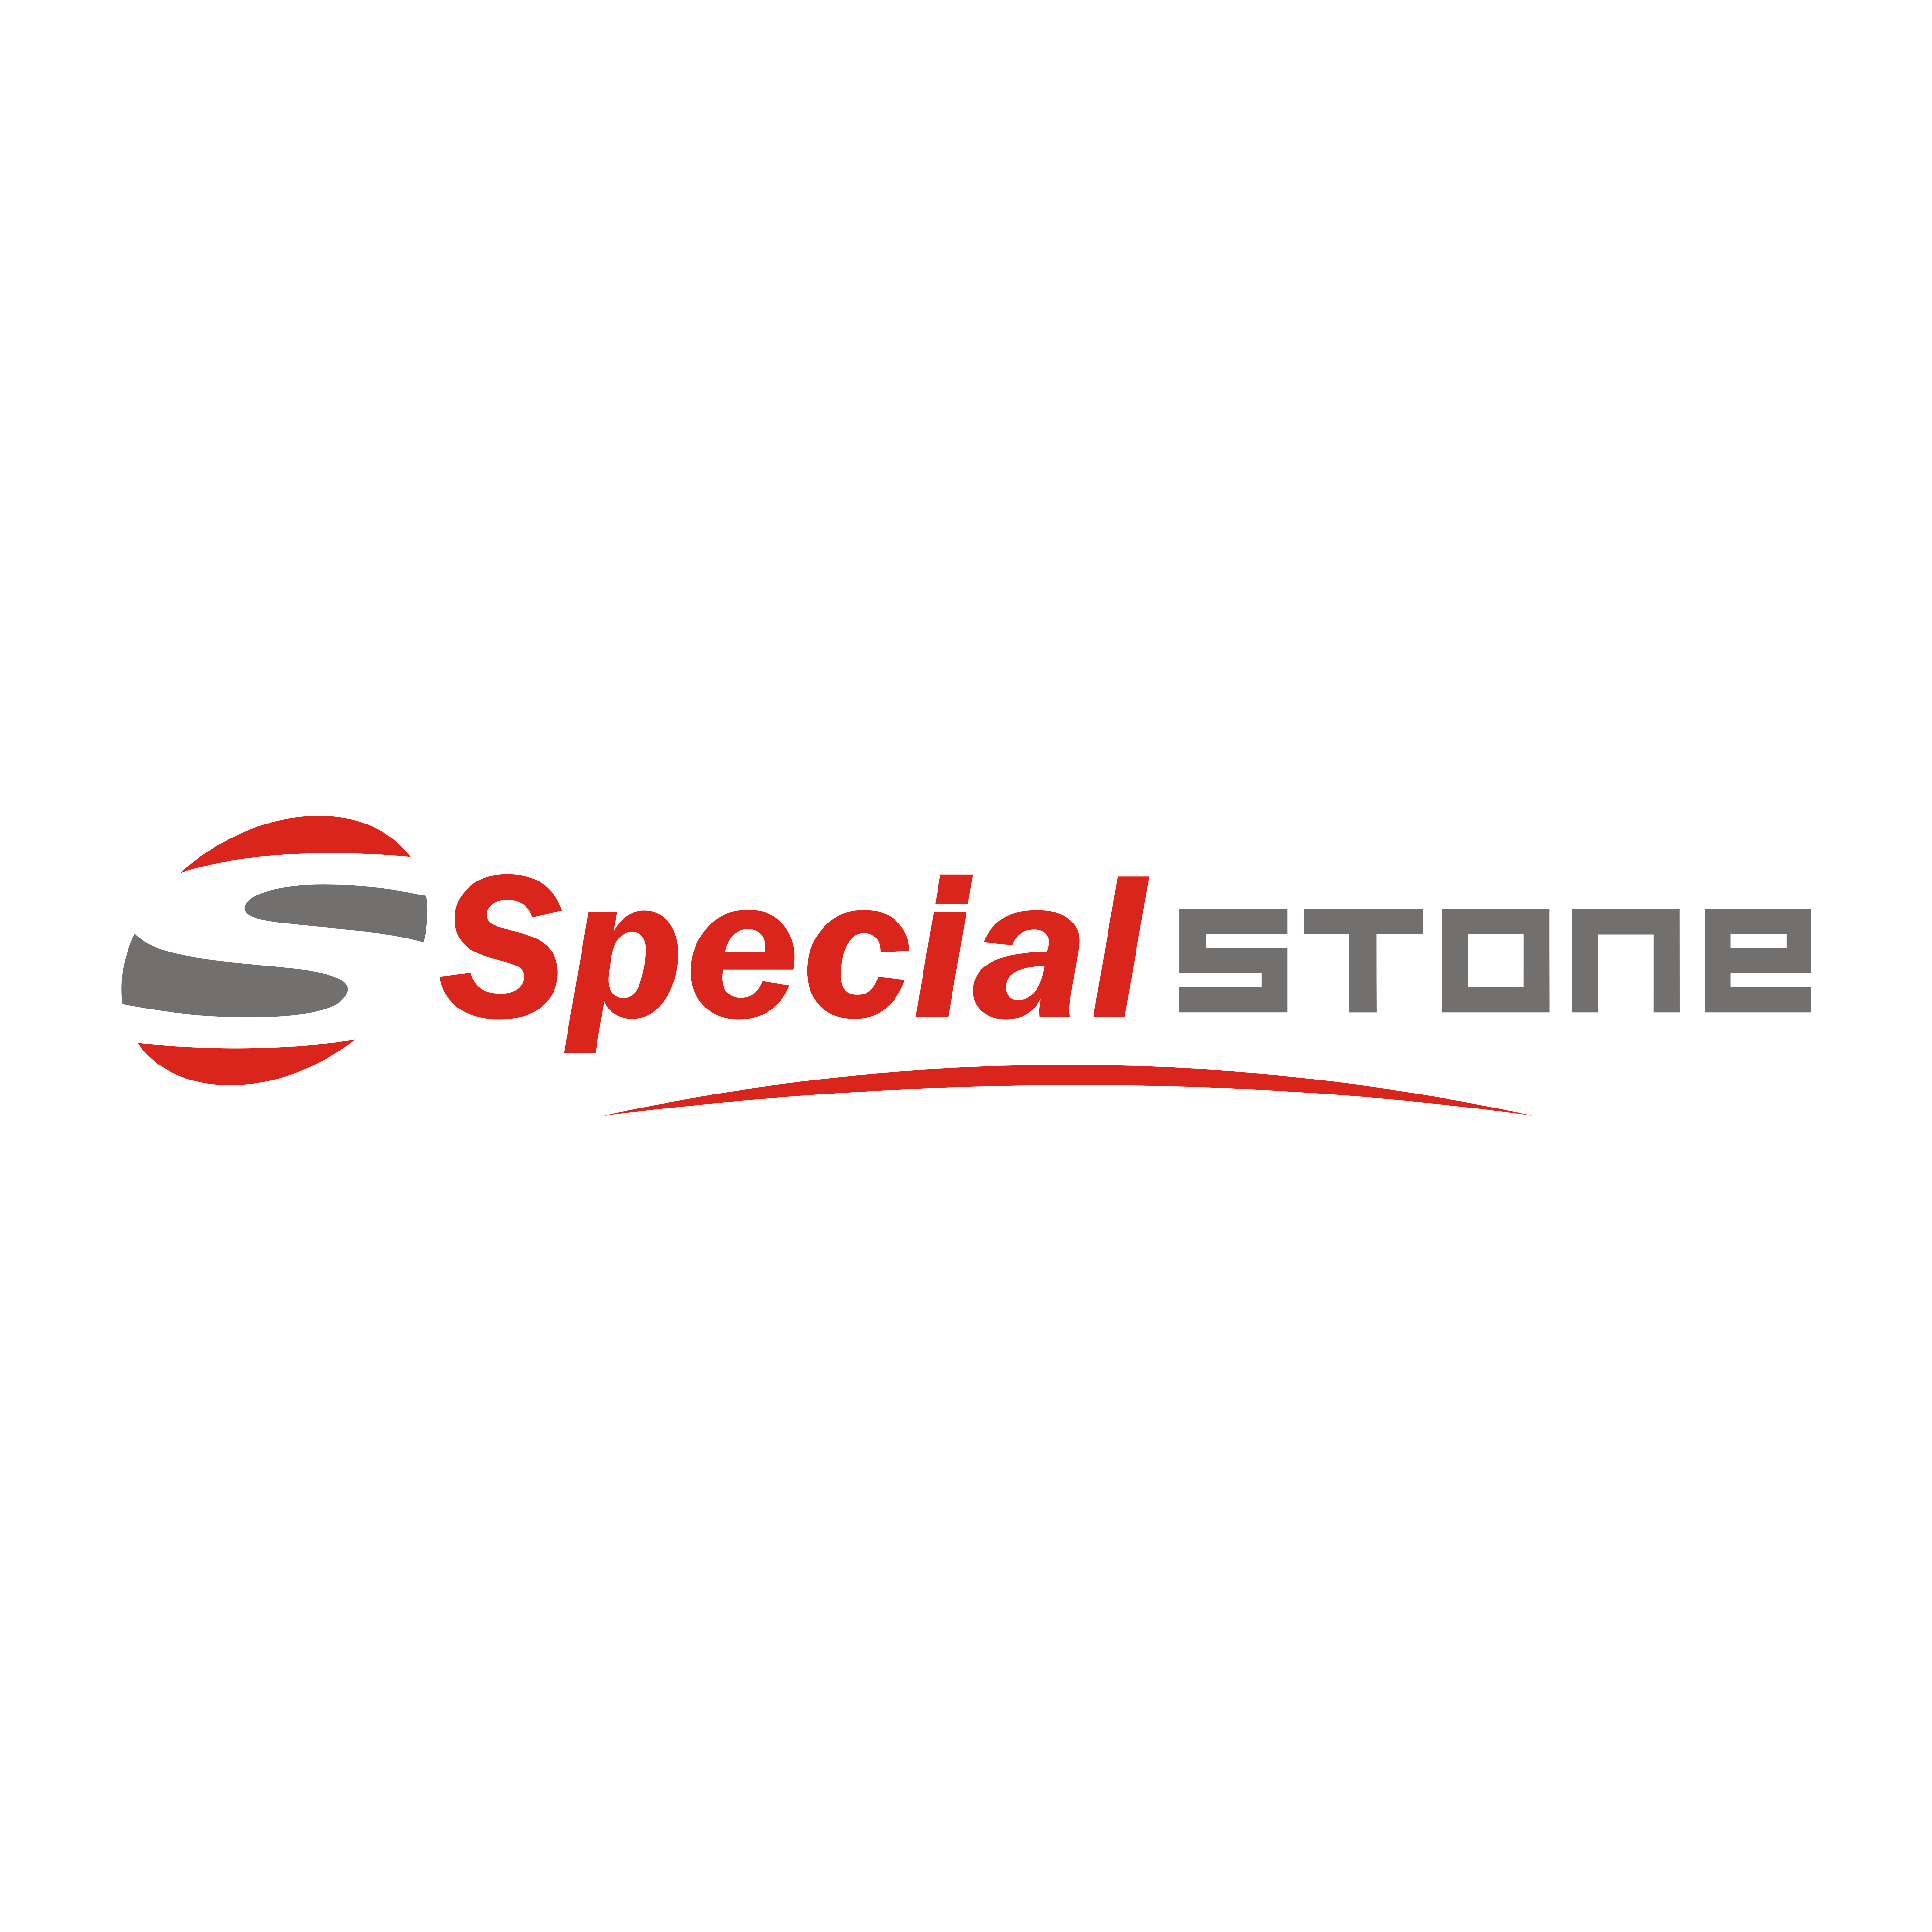 Special Stone_Logo